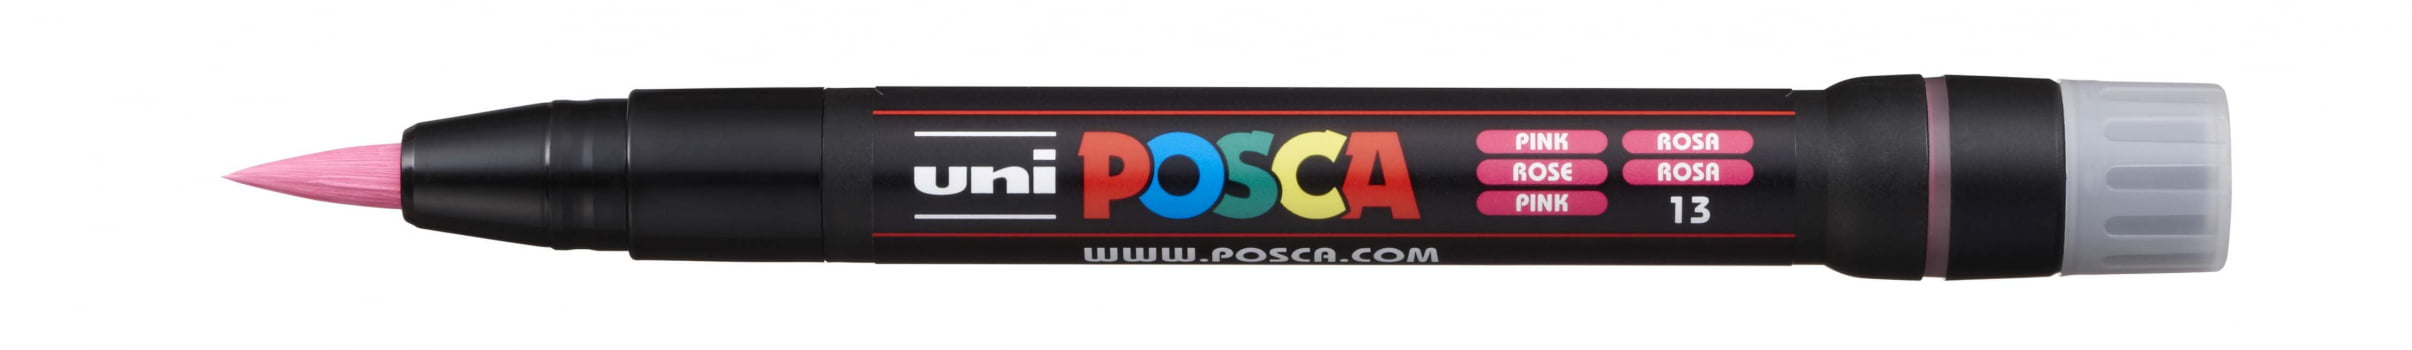 PCF-350 CANETA POSCA ROSA